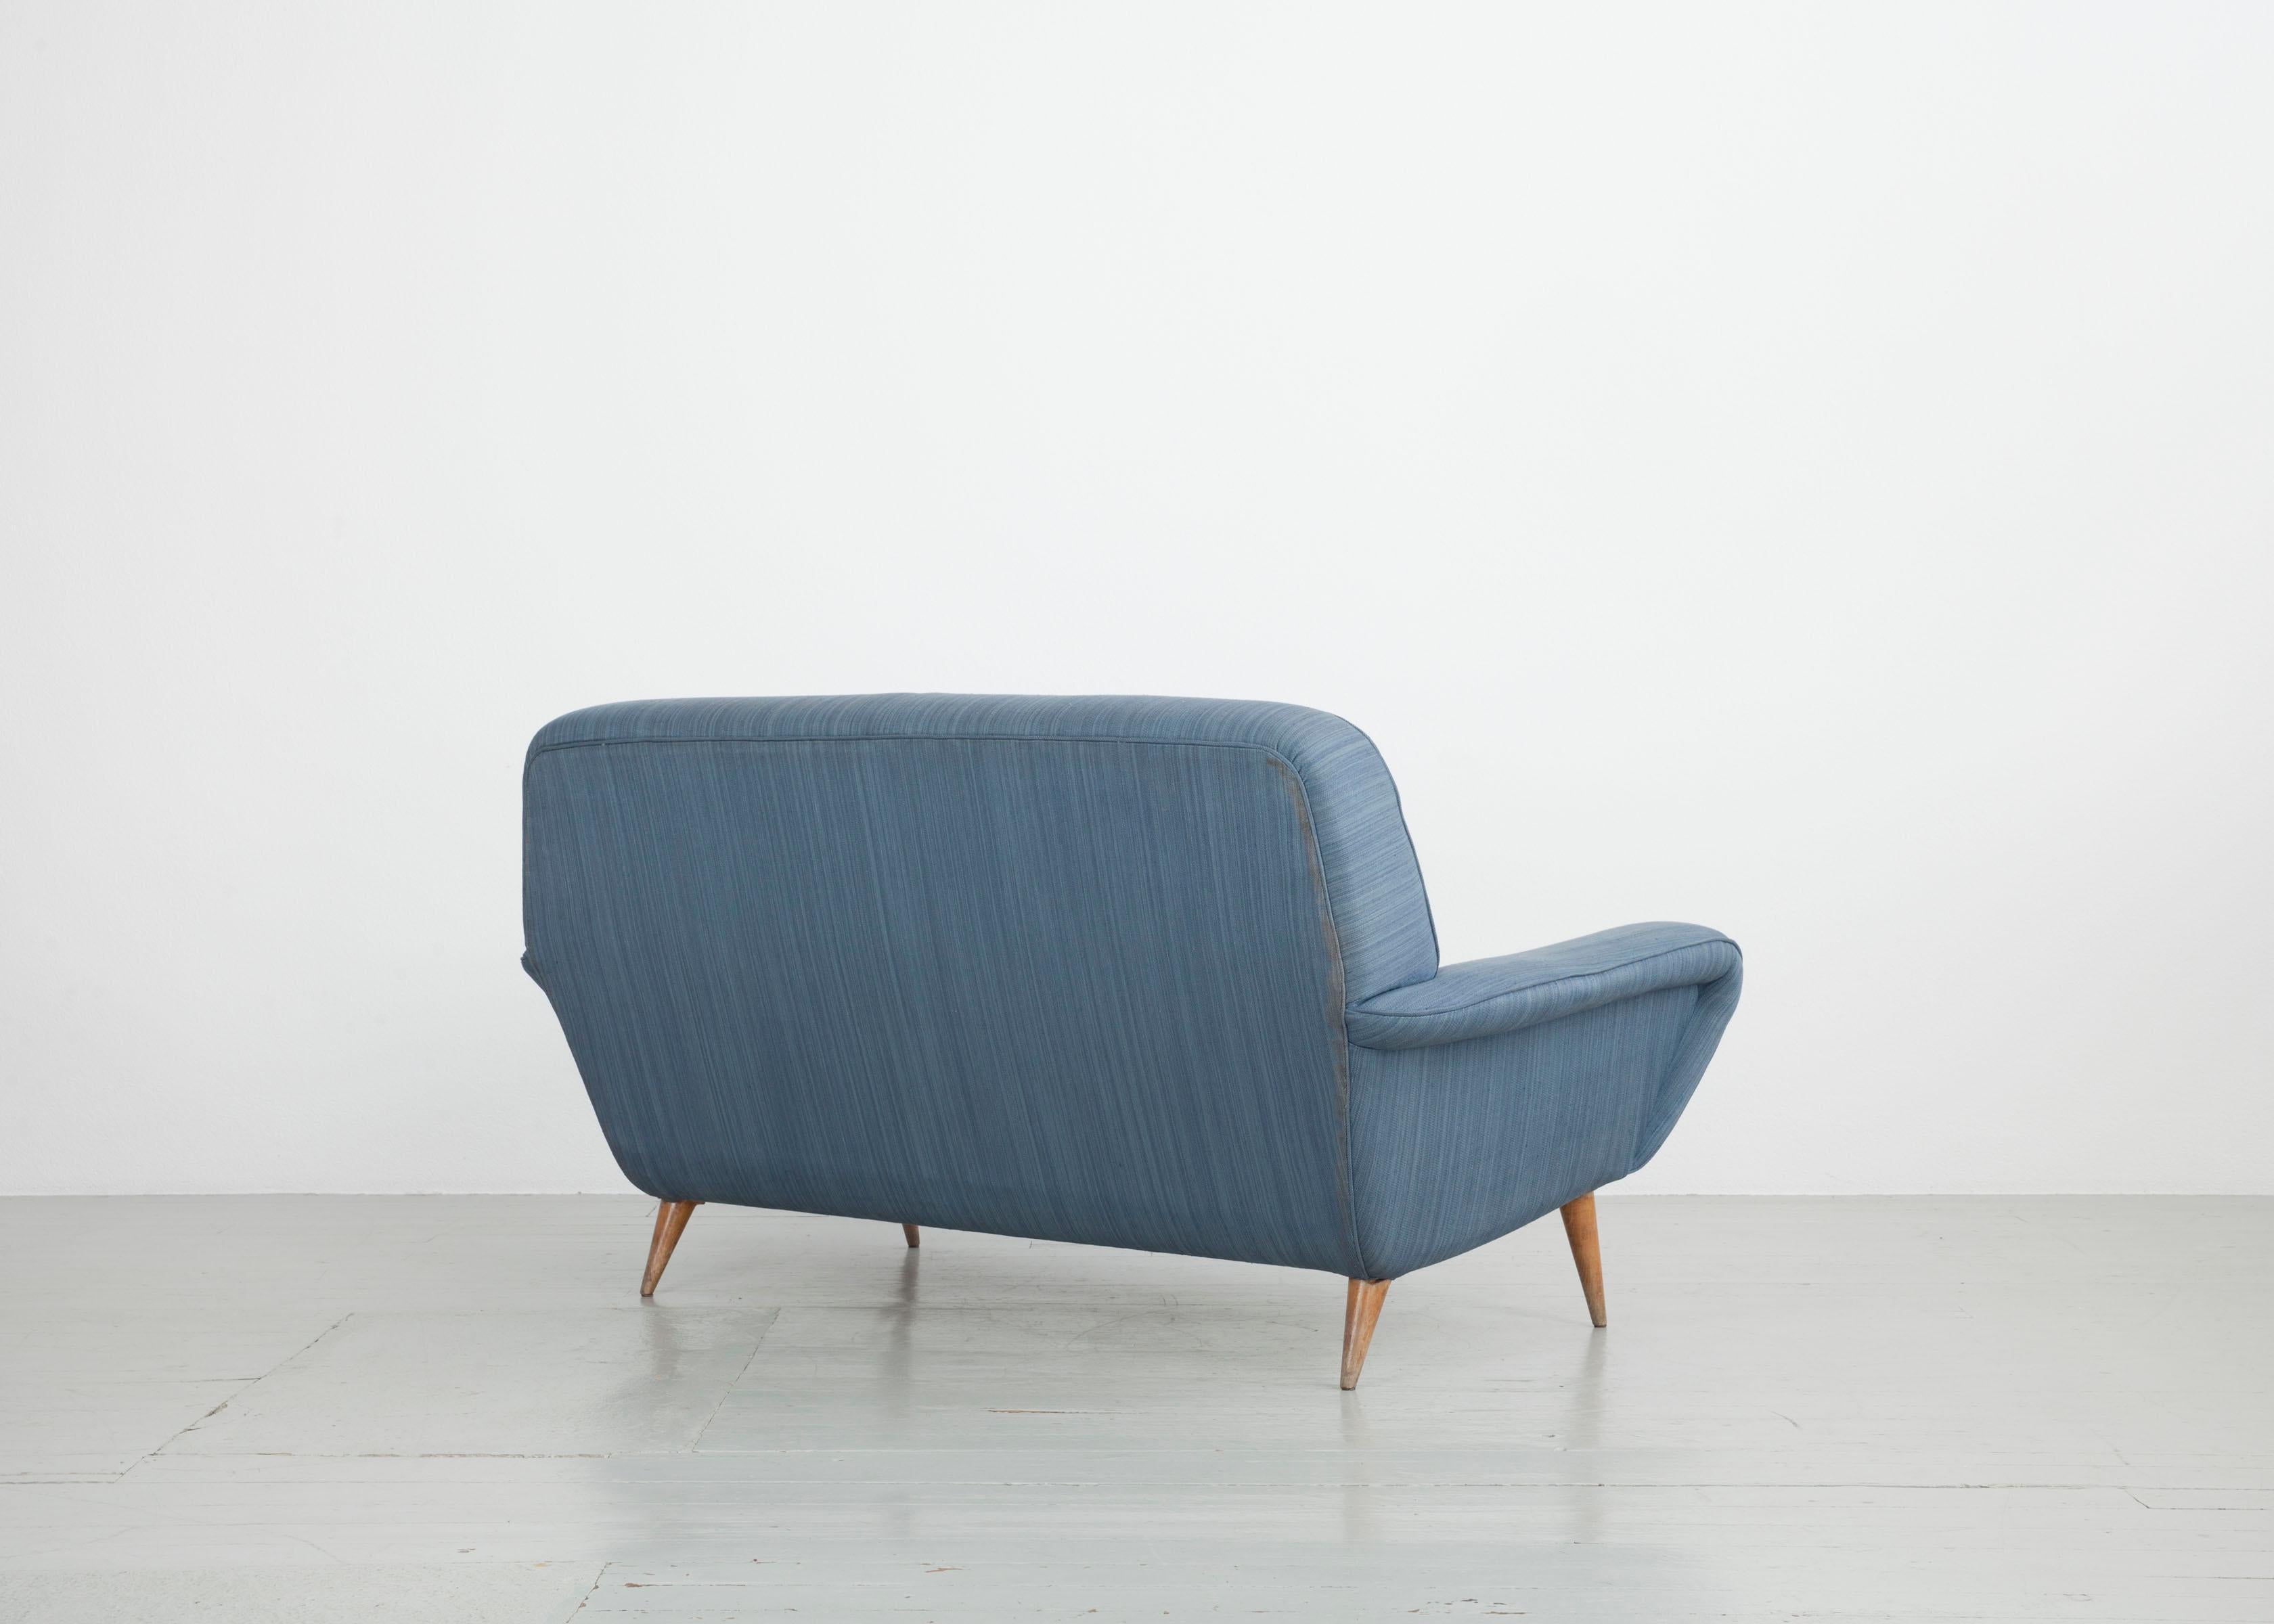 2-Sitz-Sofa Modell „830“, Design Gianfranco Frattini, Cassina, 1950er Jahre (Mitte des 20. Jahrhunderts) im Angebot